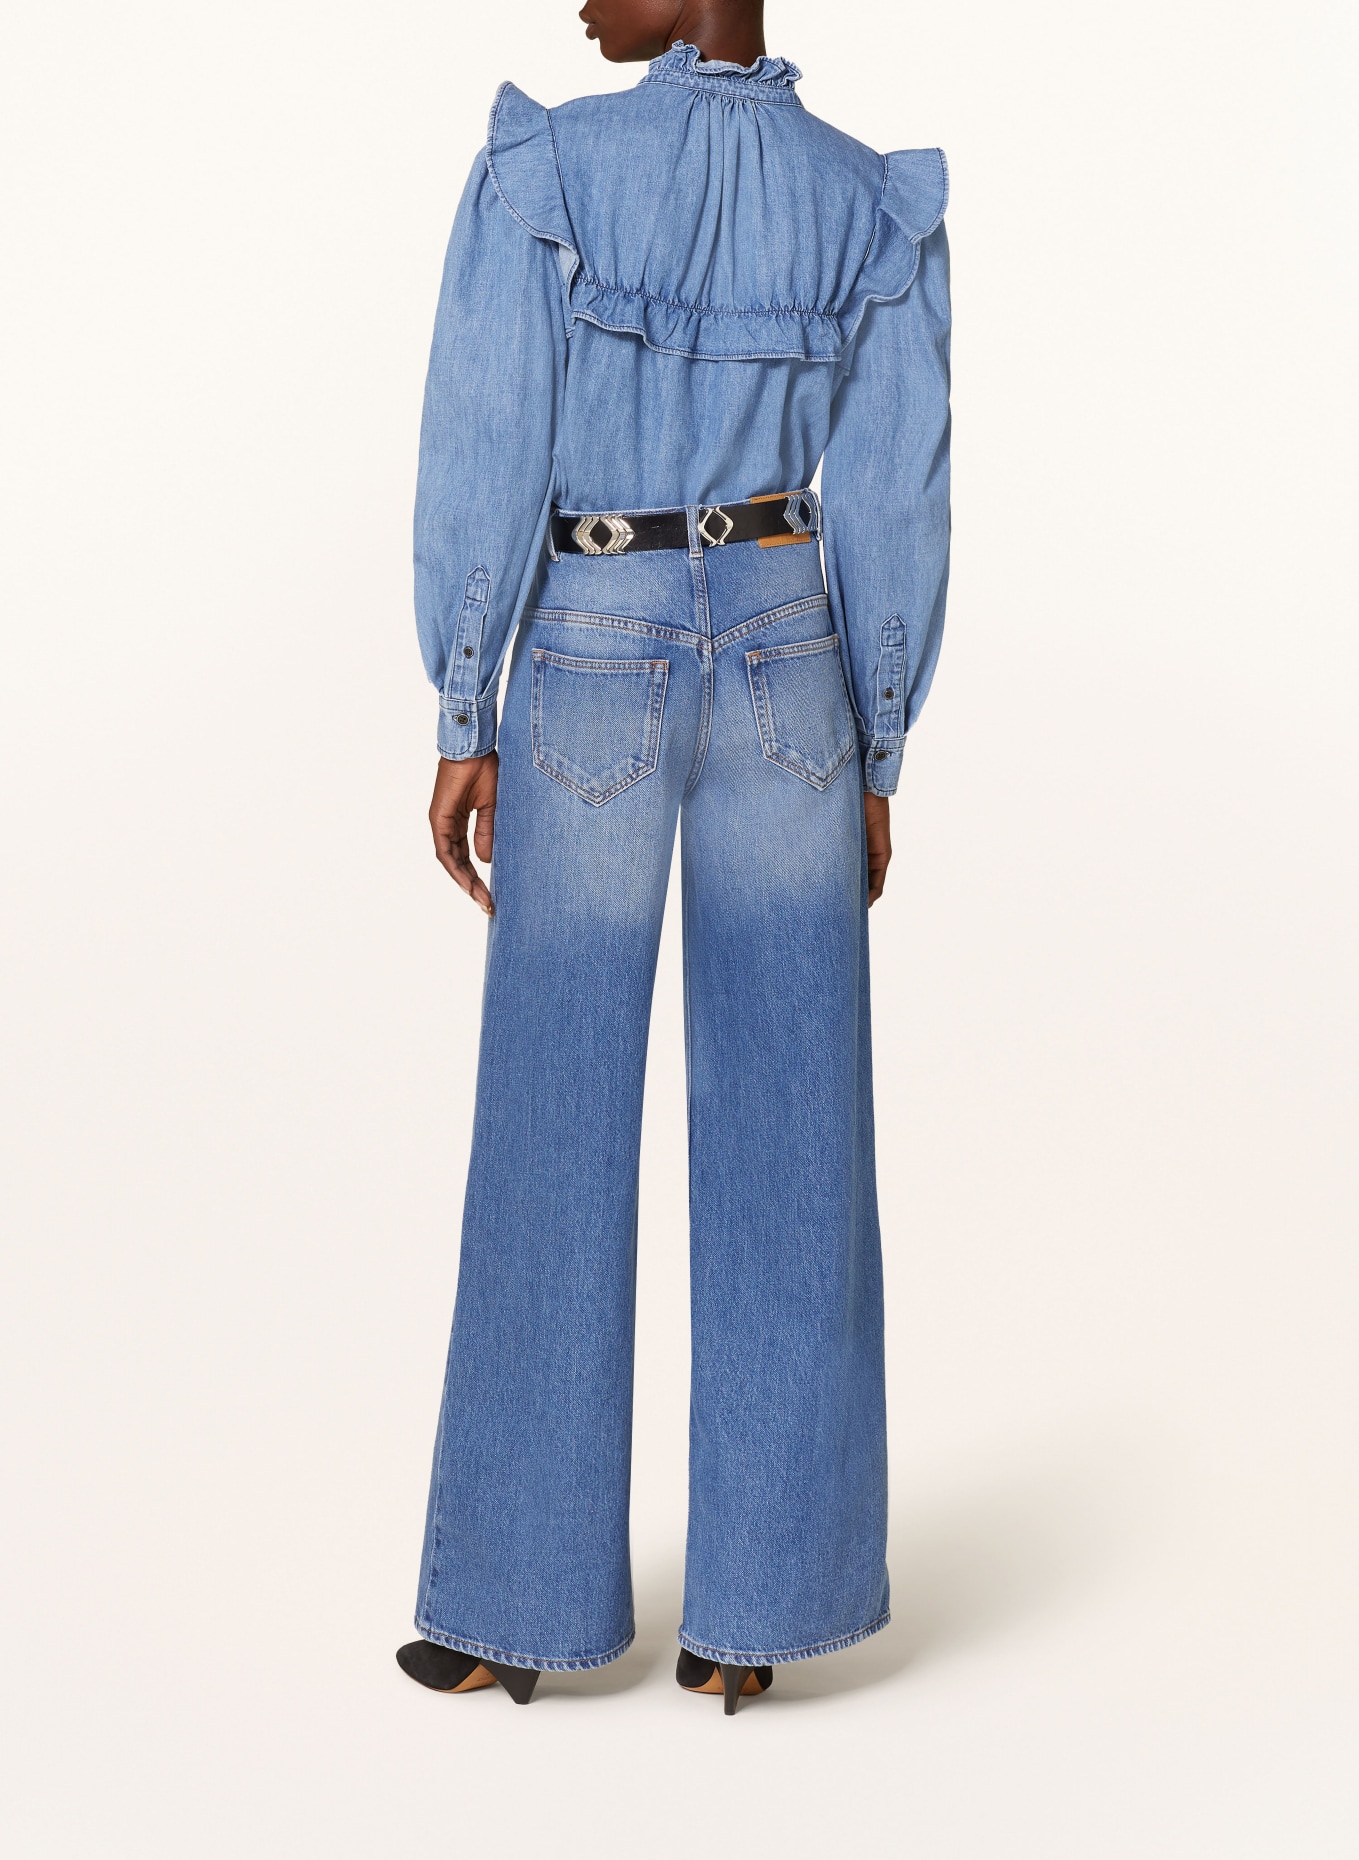 MARANT ÉTOILE Jeansbluse IDETY mit Volants, Farbe: BLAU (Bild 3)